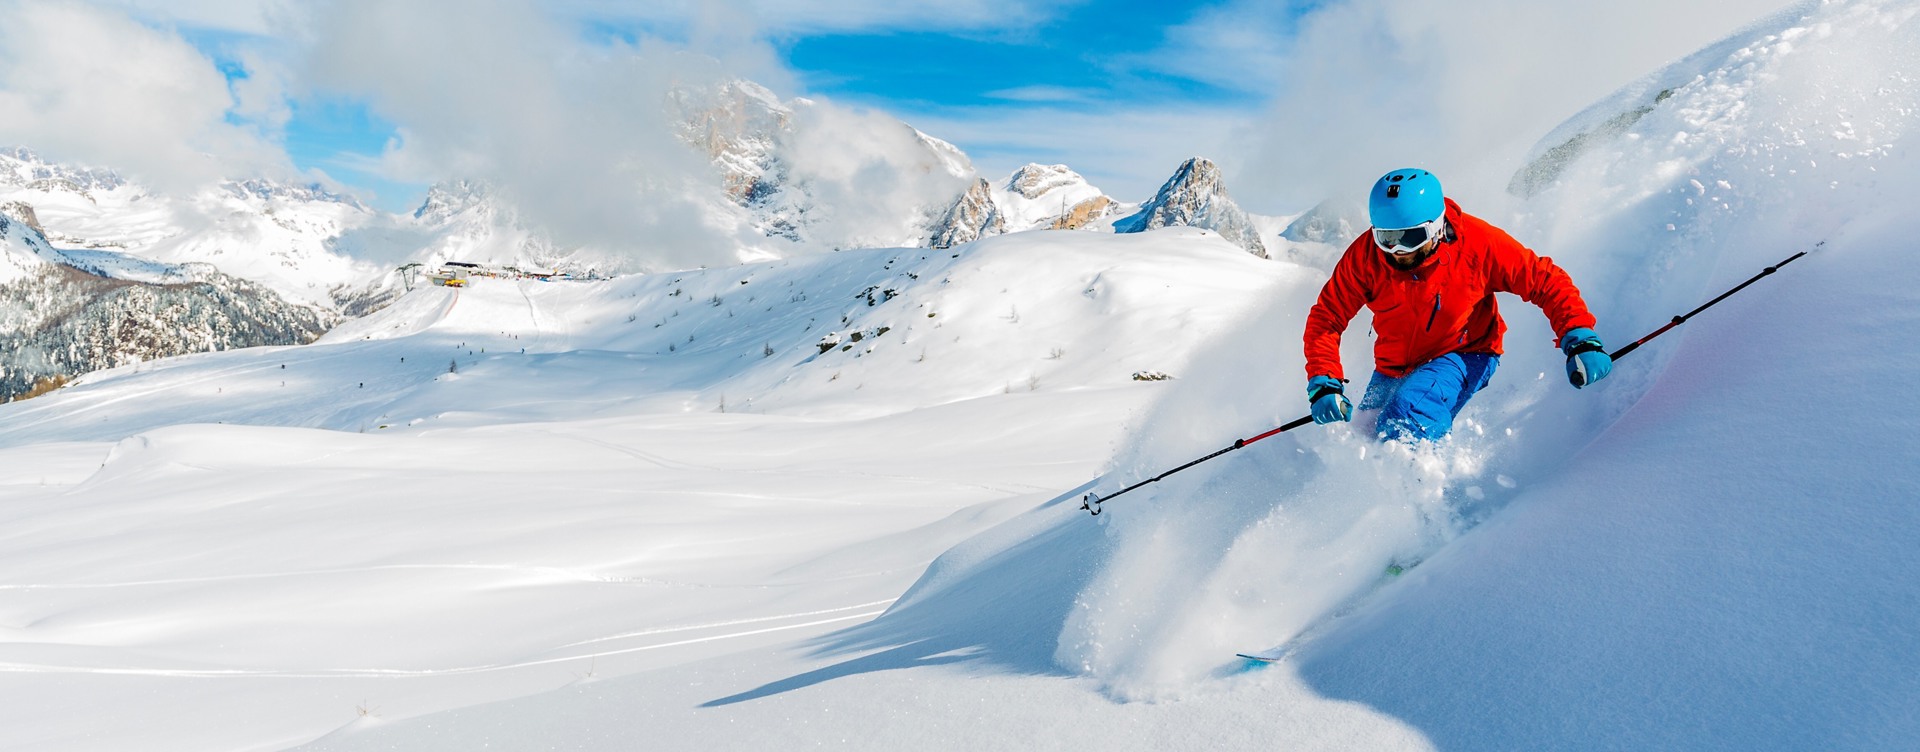 Explore the spectacular ski areas
in and around Vallorcine